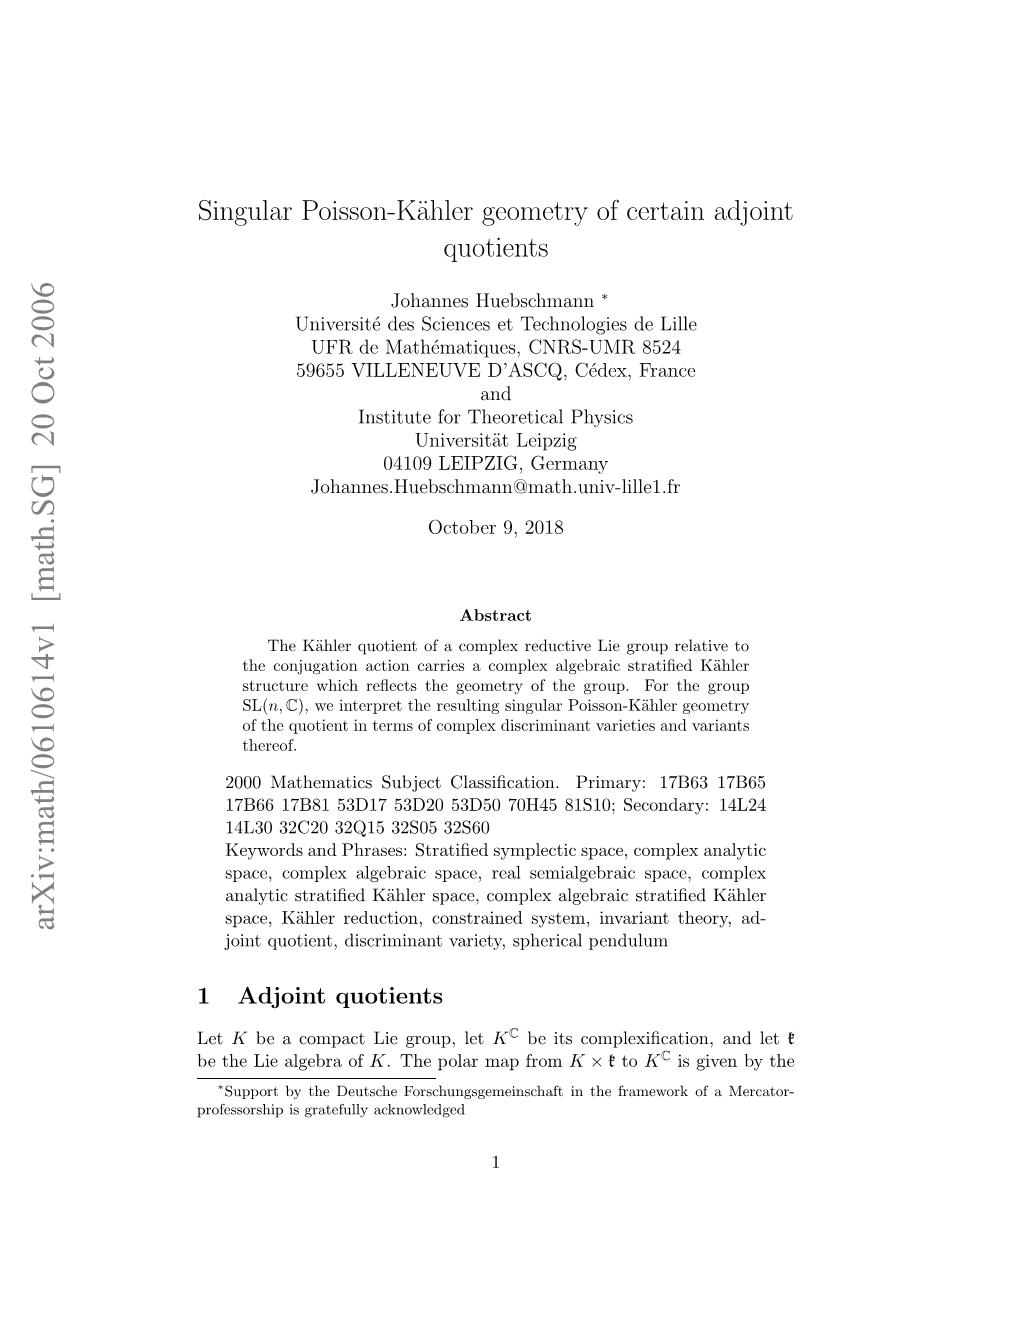 Singular Poisson-Kaehler Geometry of Certain Adjoint Quotients